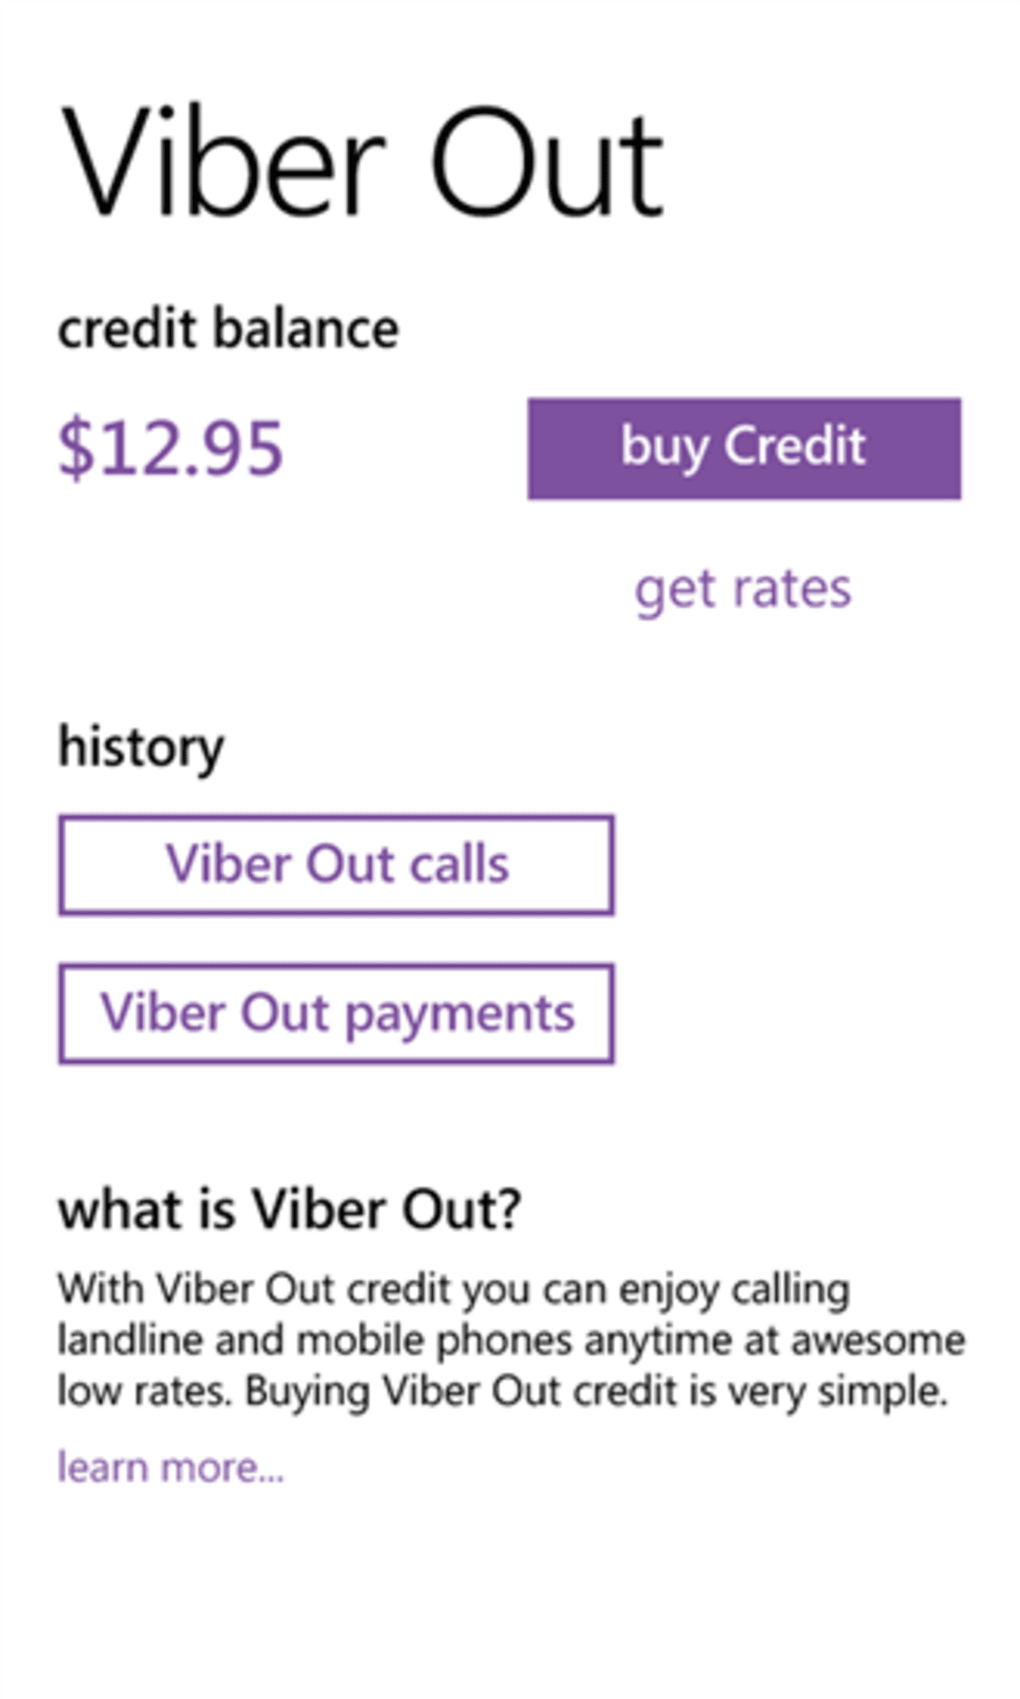 viber for windows 7 laptop free download